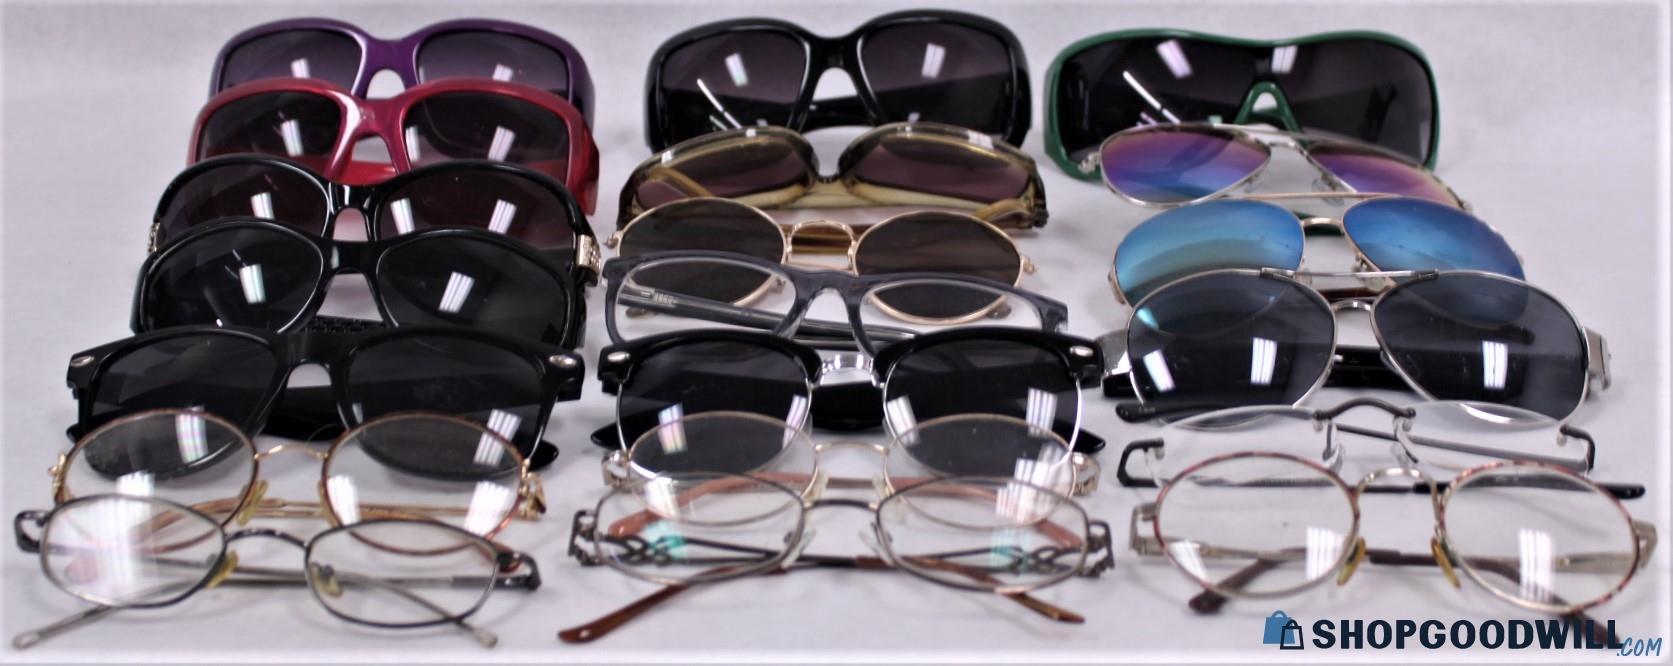 1.21lb of Sunglasses, Readers, and More - shopgoodwill.com